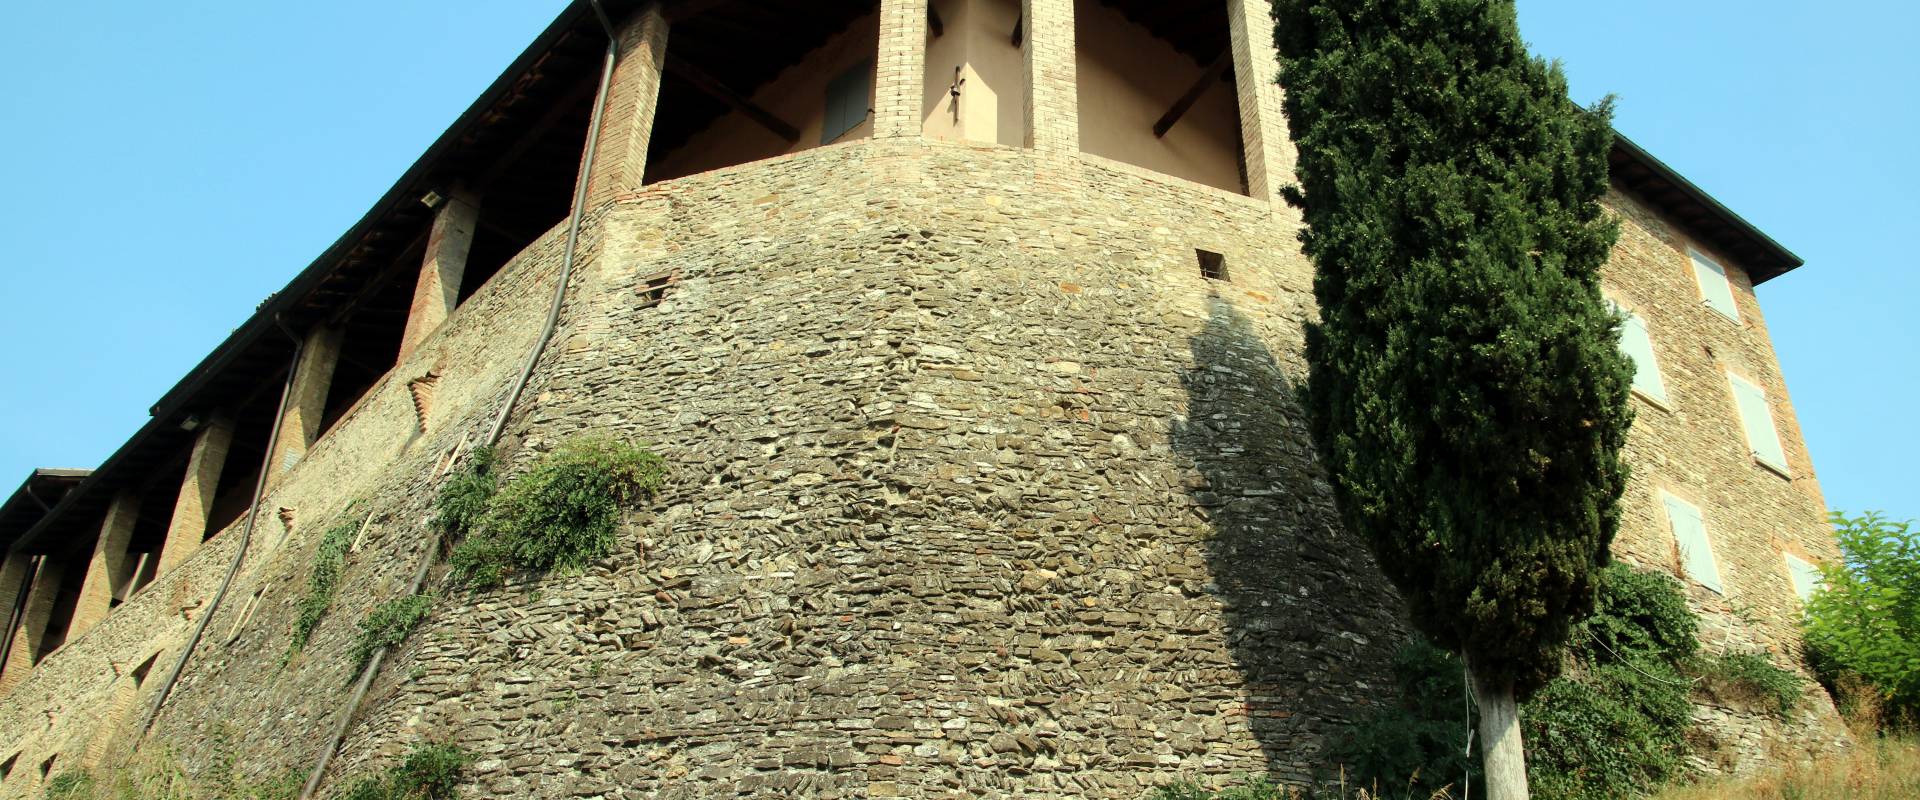 Castello di Levizzano Rangone 06 photo by Mongolo1984